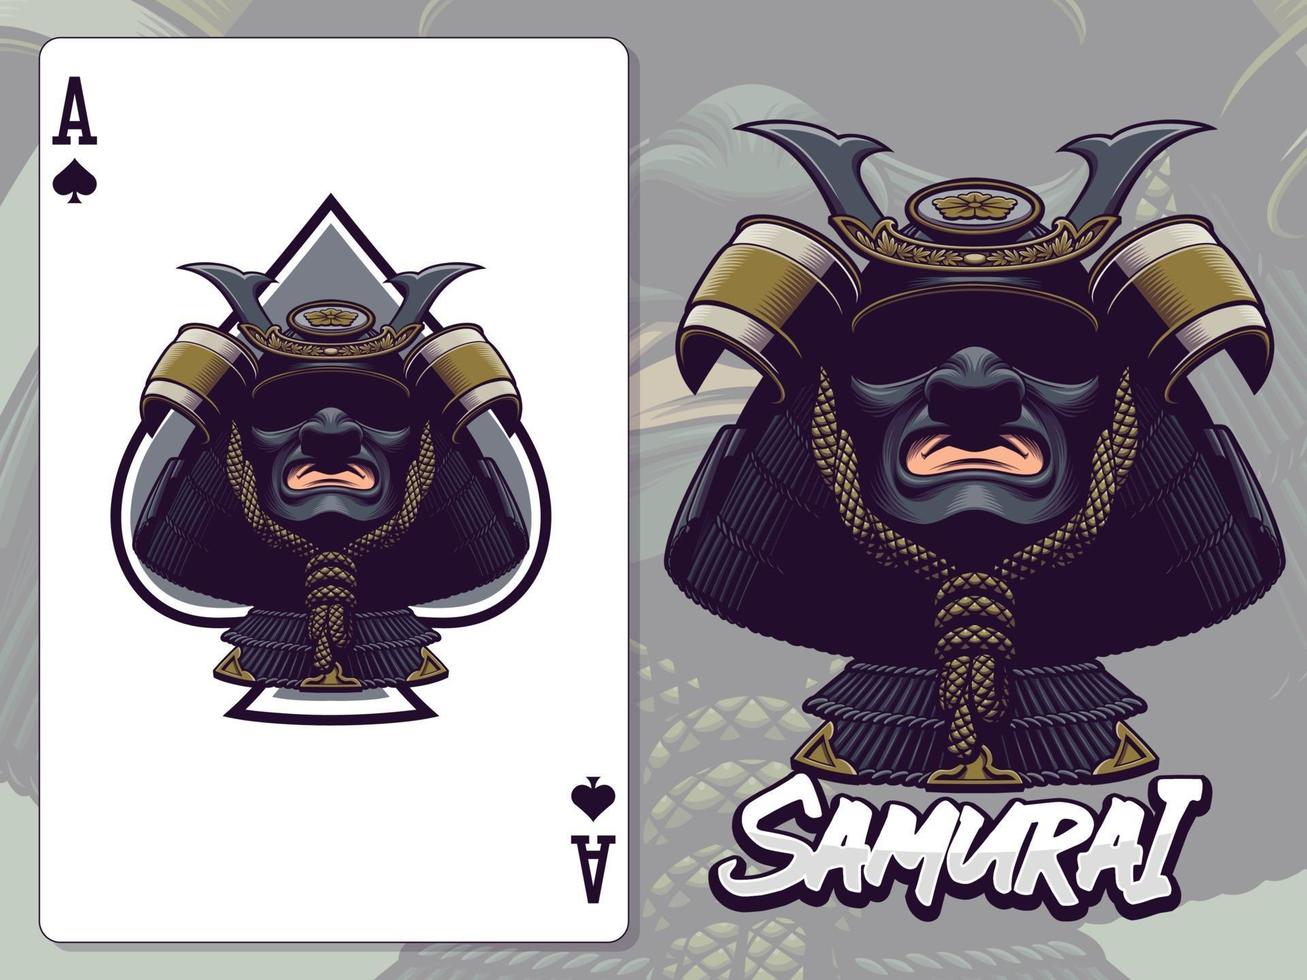 Samurai-Kopfillustration für Pik-As-Kartenentwurf vektor